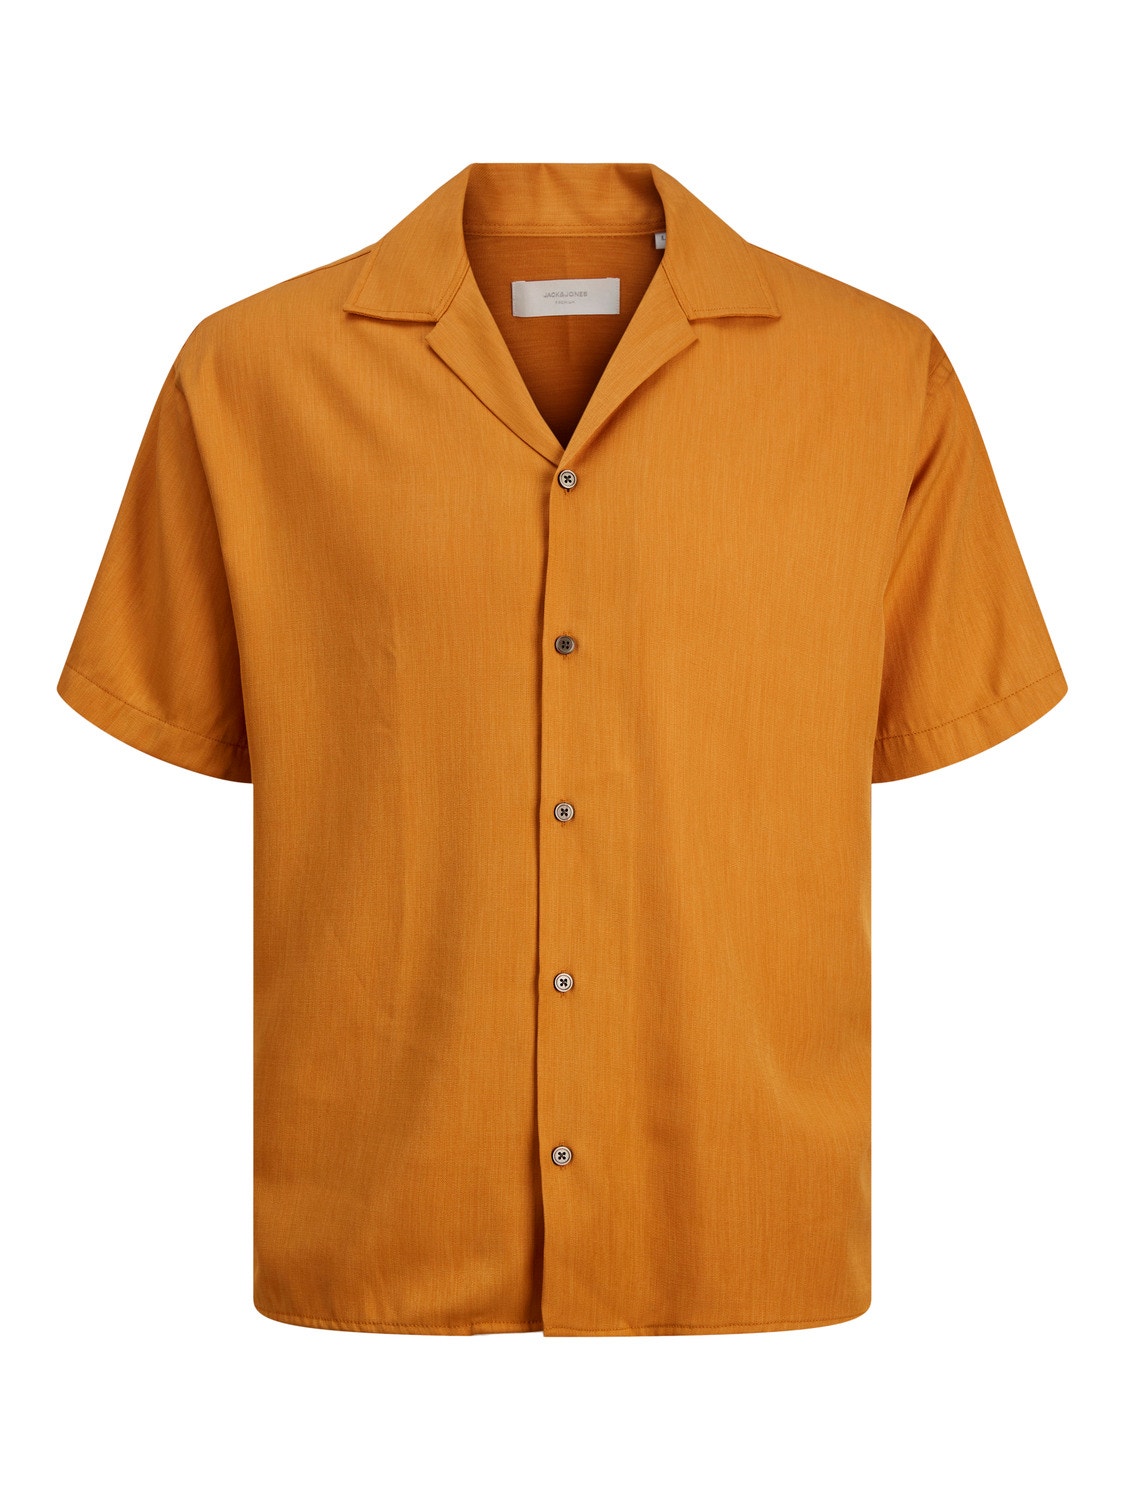 Jack & Jones Camisa Relaxed Fit -Peach Caramel - 12251027